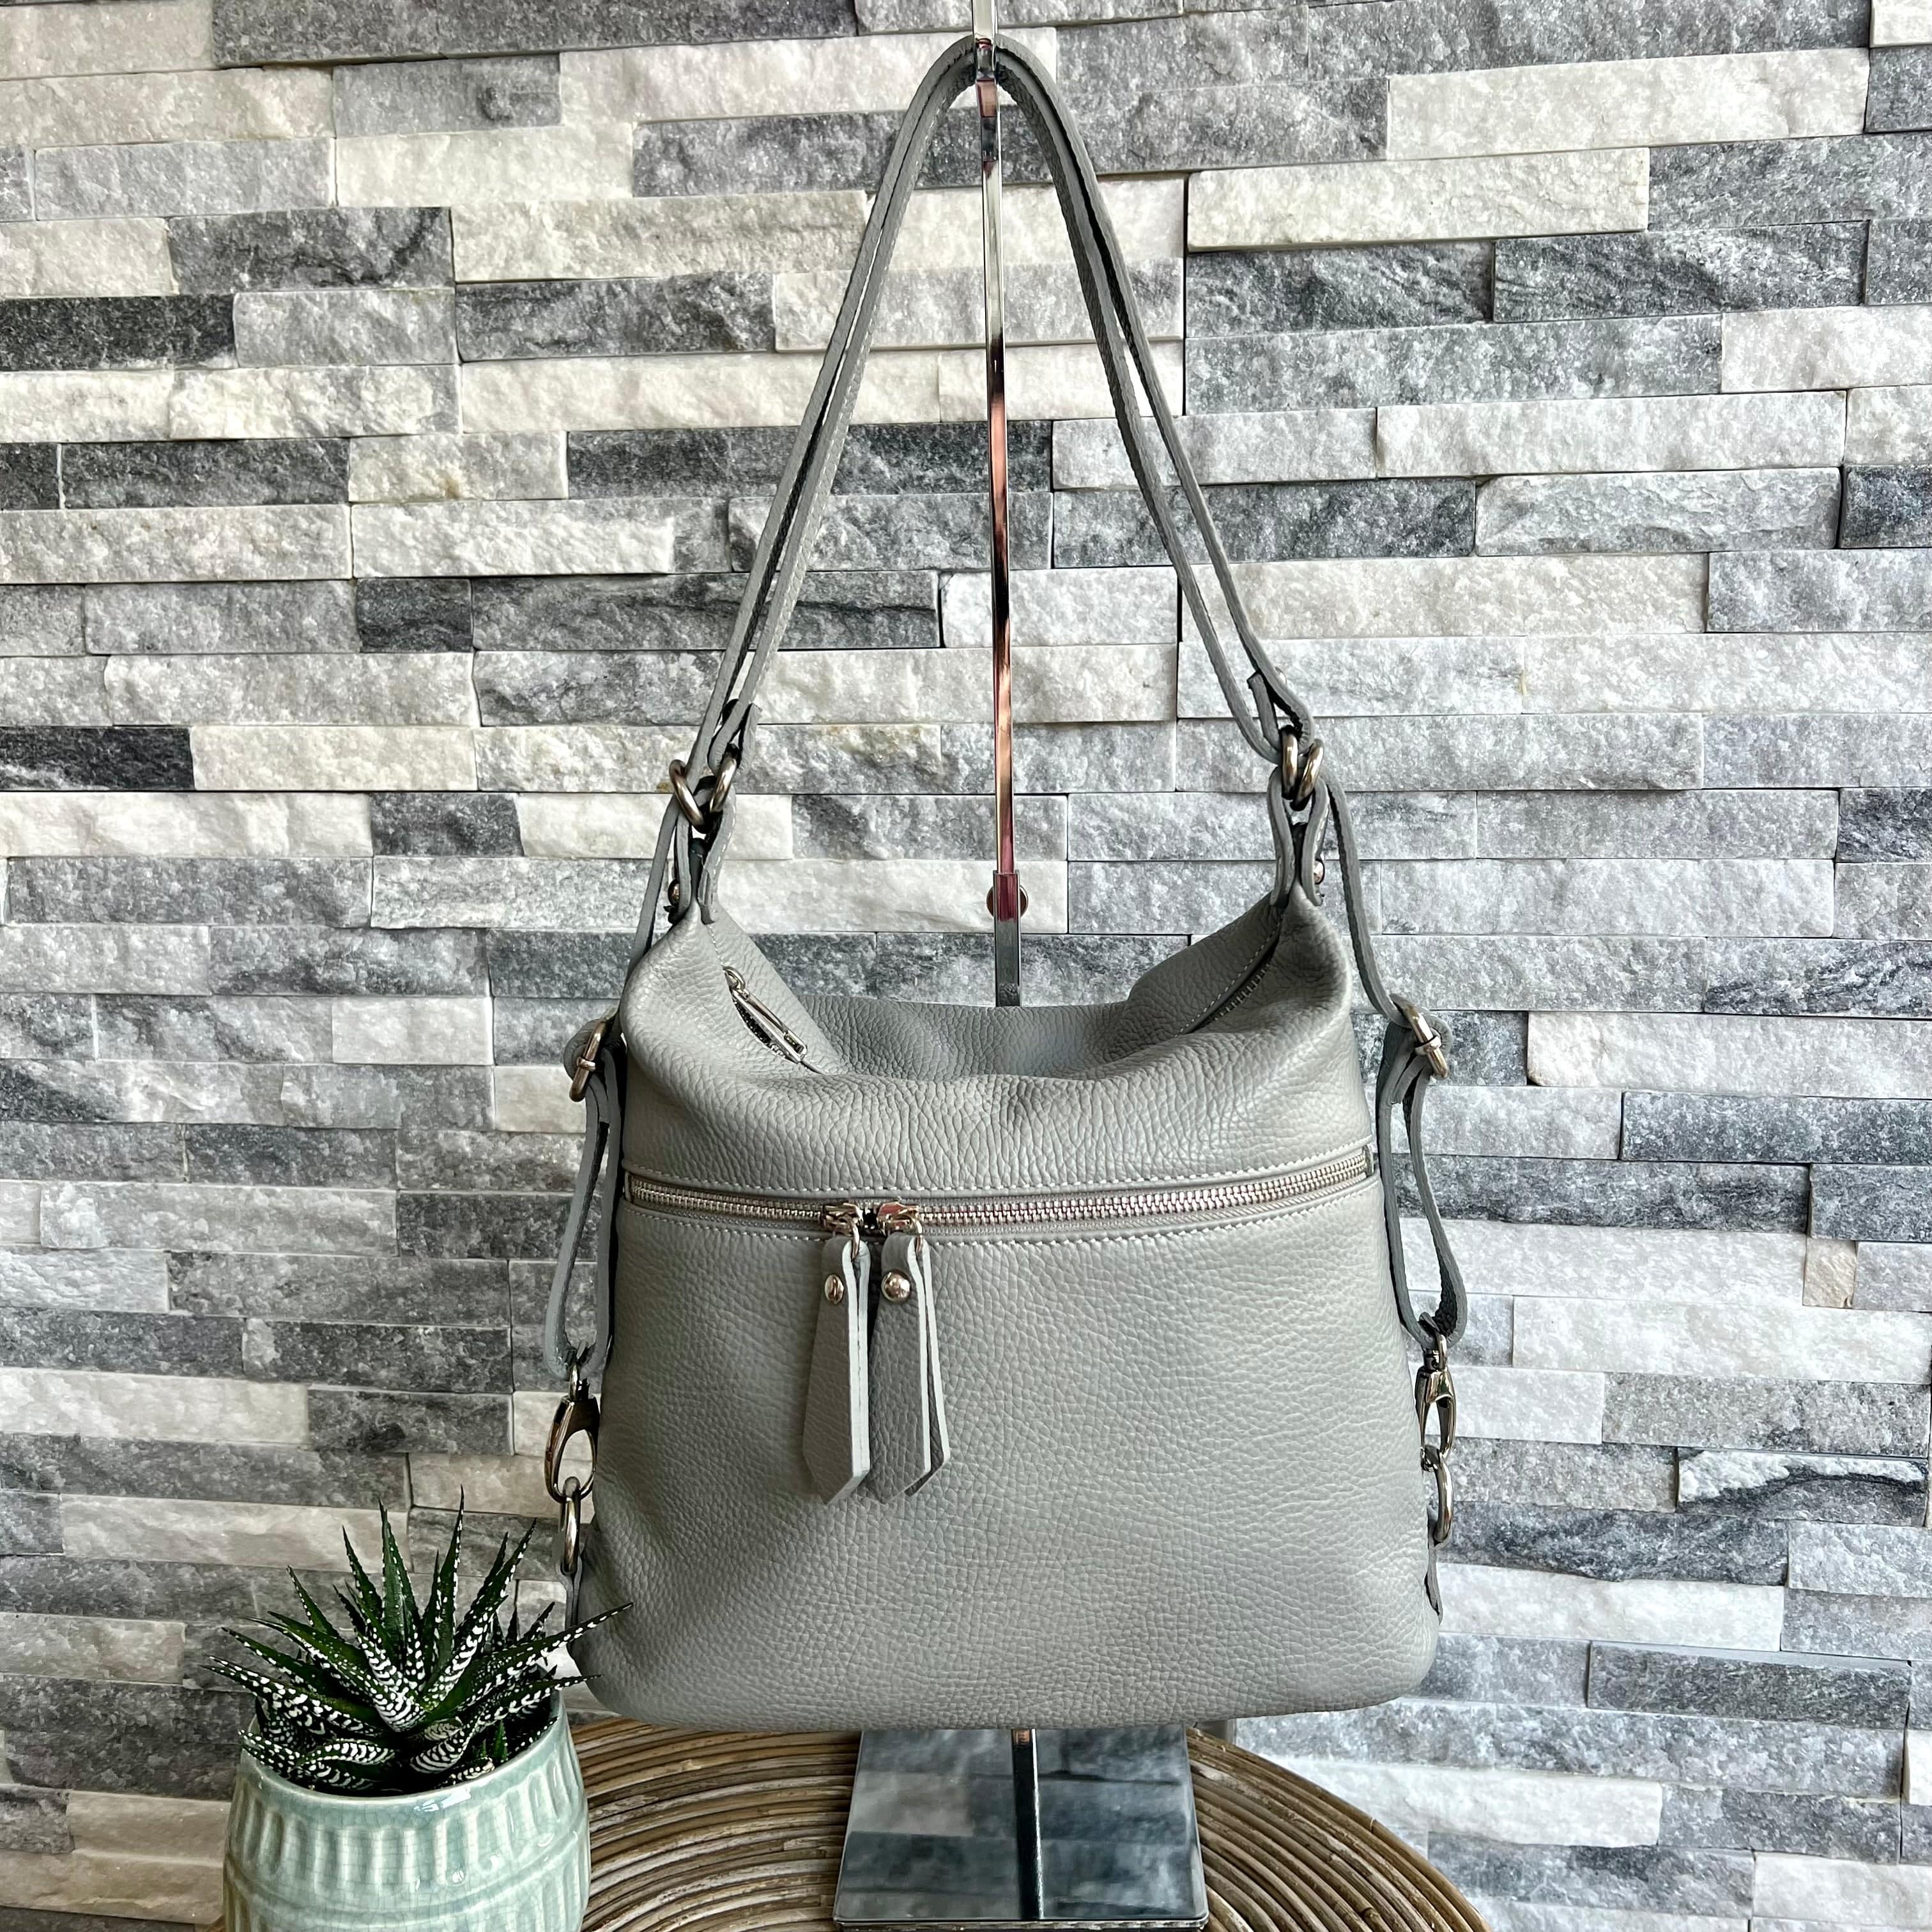 lusciousscarves Handbags Pale Grey Italian Leather Convertible Rucksack Backpack Bag